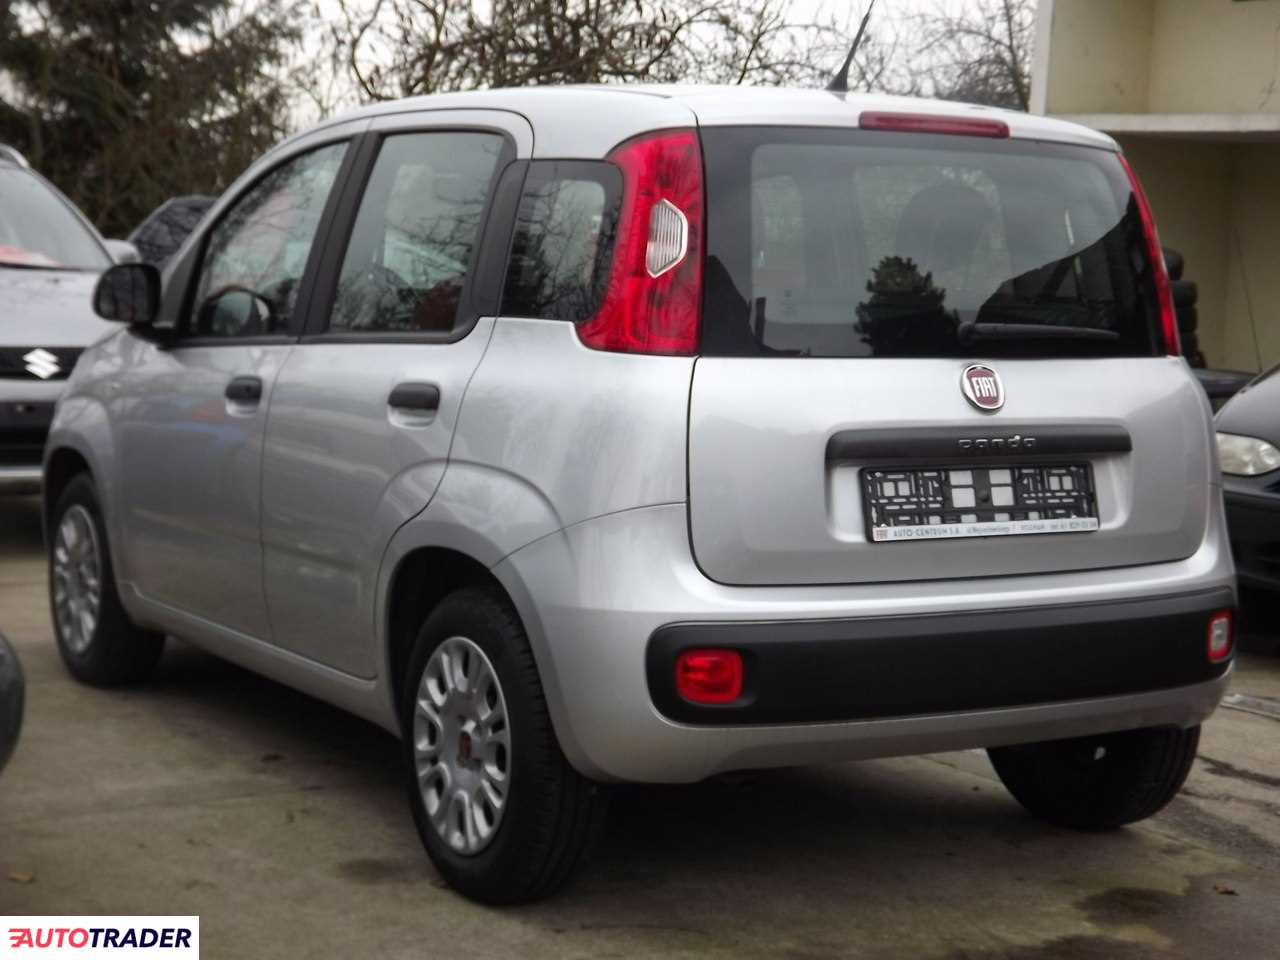 Fiat Panda 1.2 benzyna 69 KM 2014r. (Skawina) Autotrader.pl